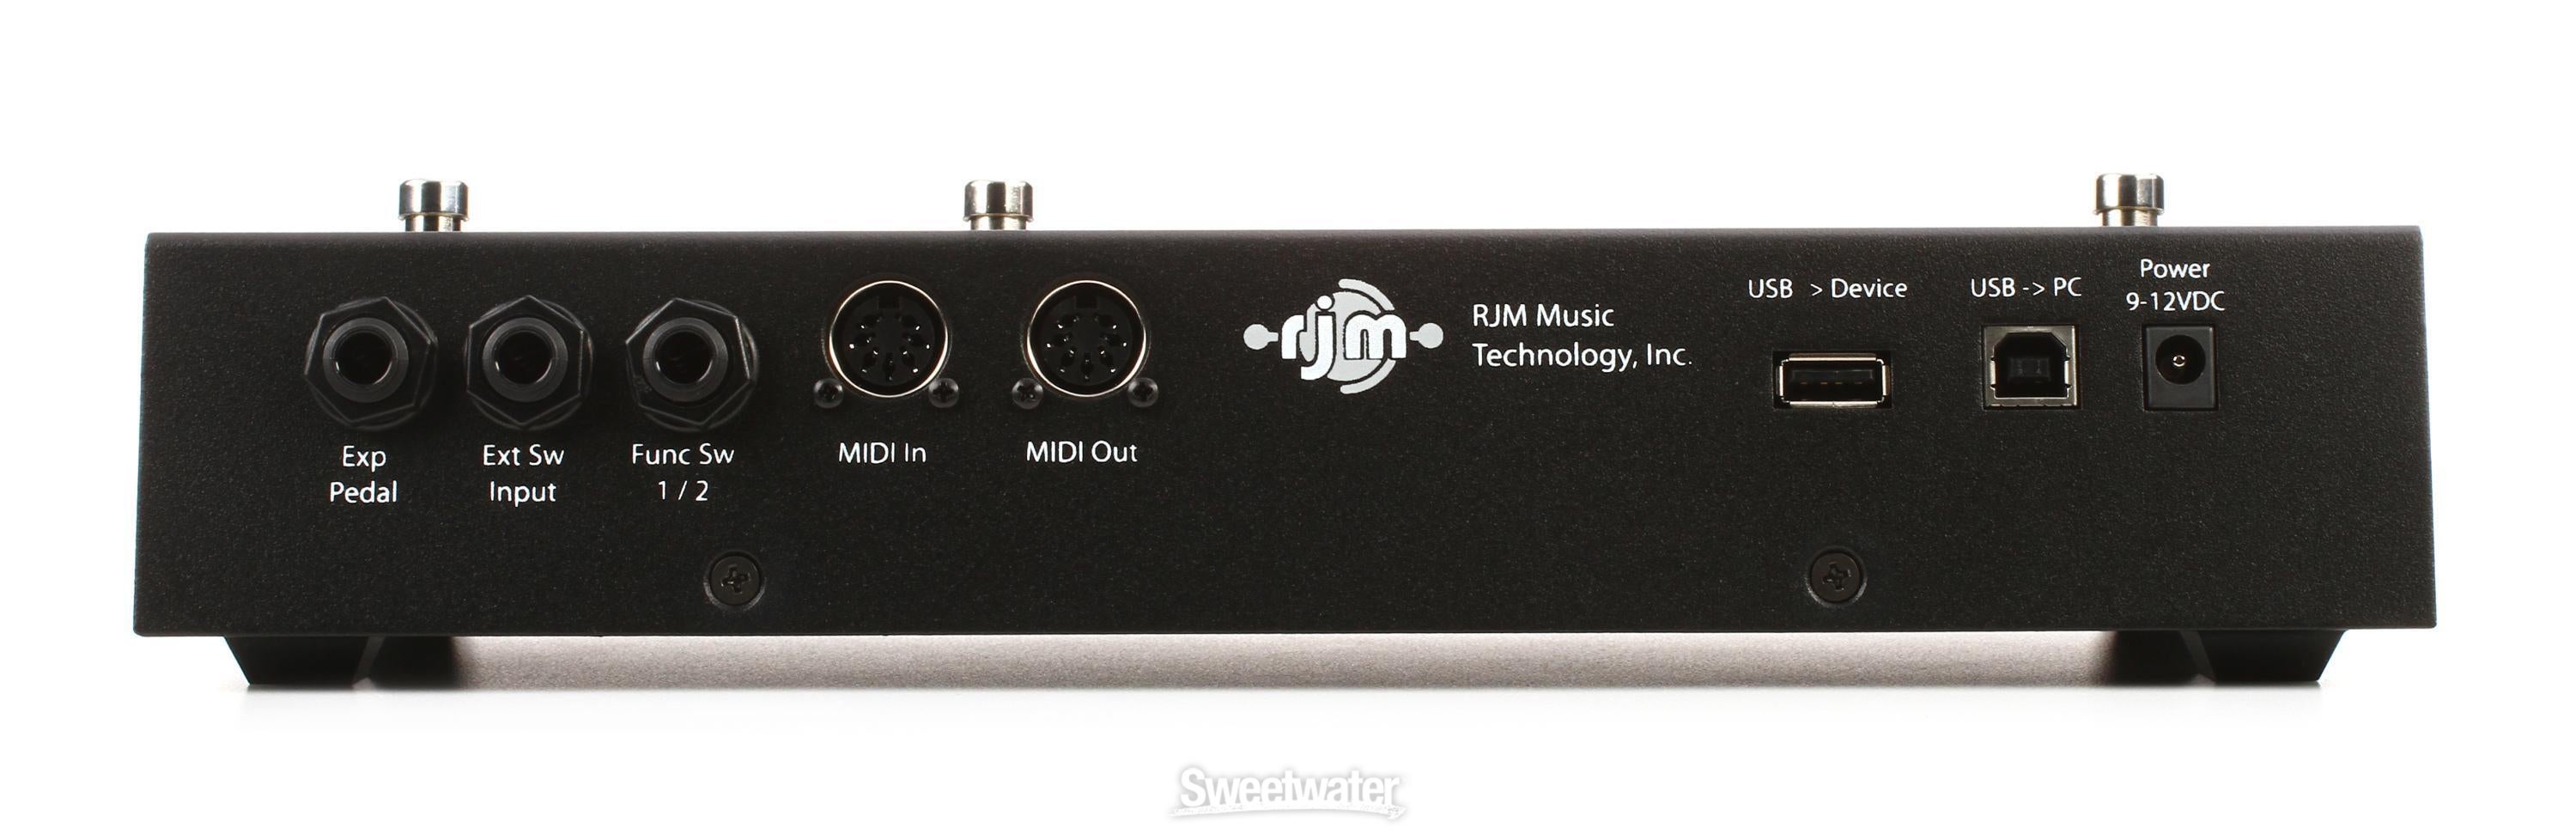 RJM Music Mastermind LT MIDI Controller | Sweetwater